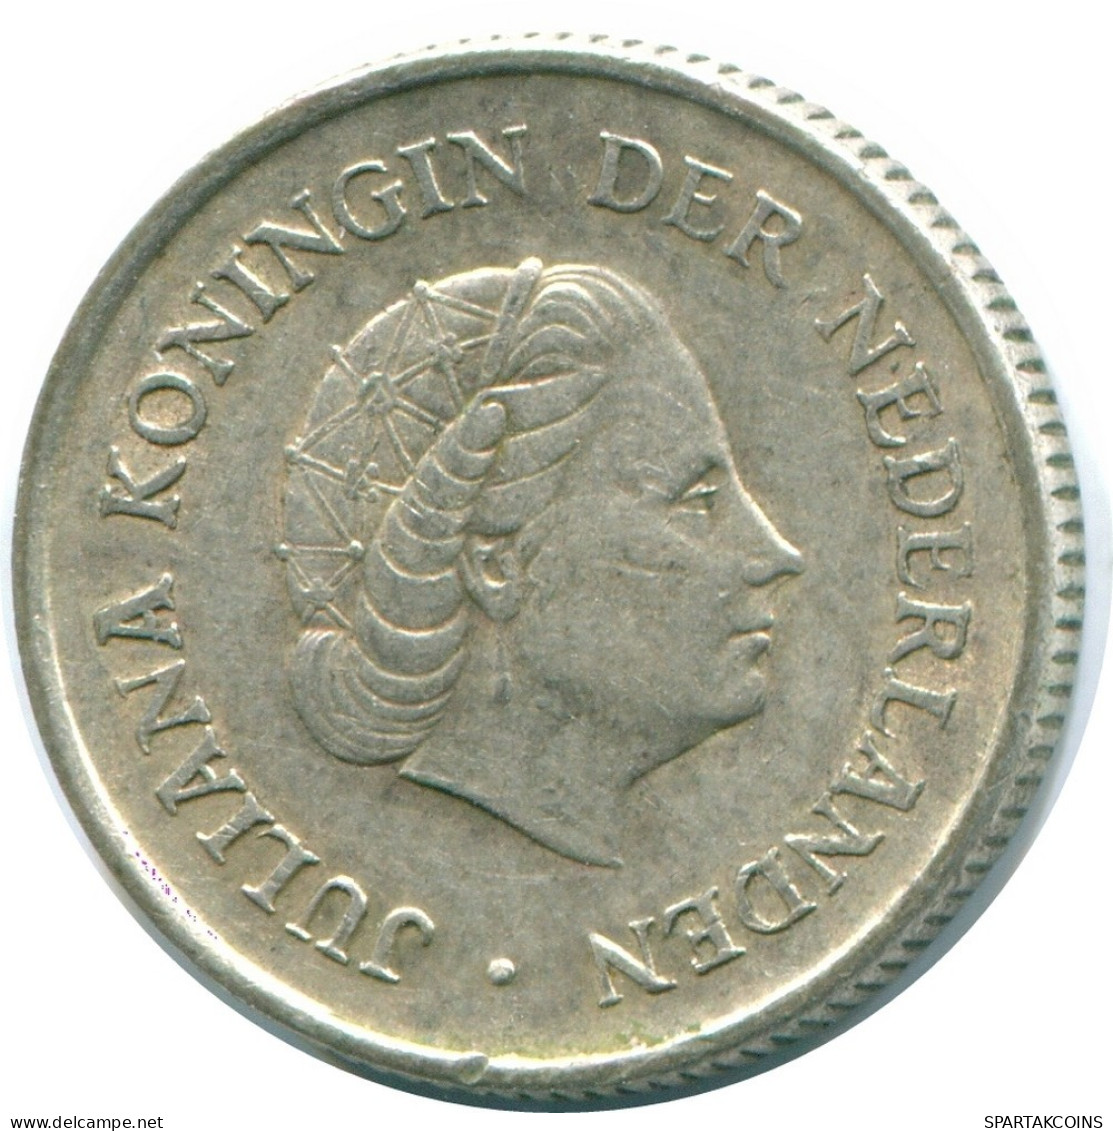 1/4 GULDEN 1965 NETHERLANDS ANTILLES SILVER Colonial Coin #NL11274.4.U.A - Niederländische Antillen